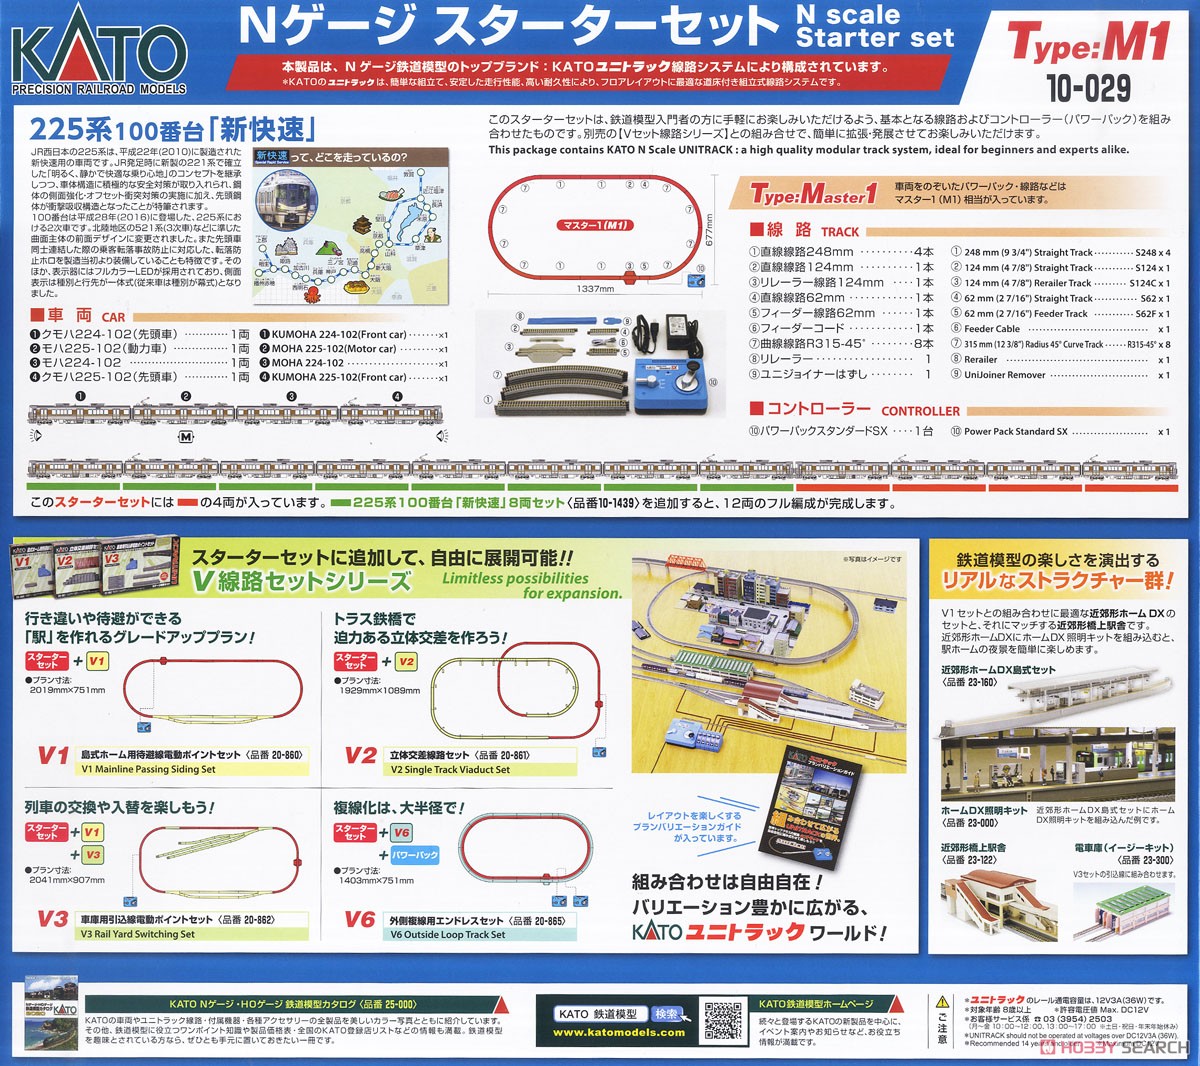 Starter Set Series 225-100 (Special Rapid Service) (4-Car Set + Master1[M1]) (Model Train) About item1